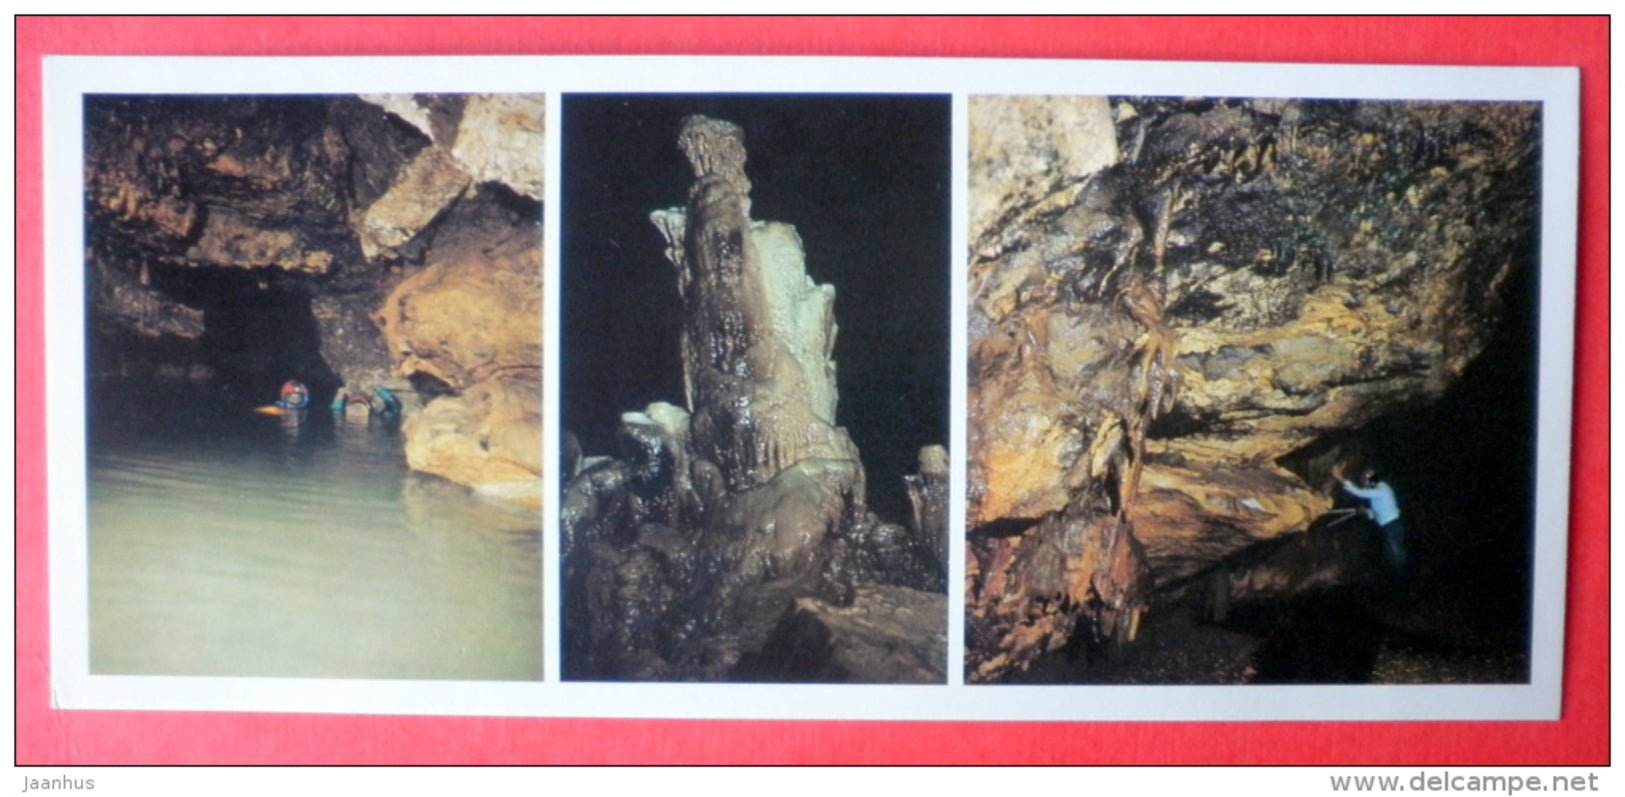 Tsalkhtubo cave - speleologist - stalagmites - river - Caves of ancient Colchis - Kutaisi - 1988 - USSR Georgia - unused - JH Postcards